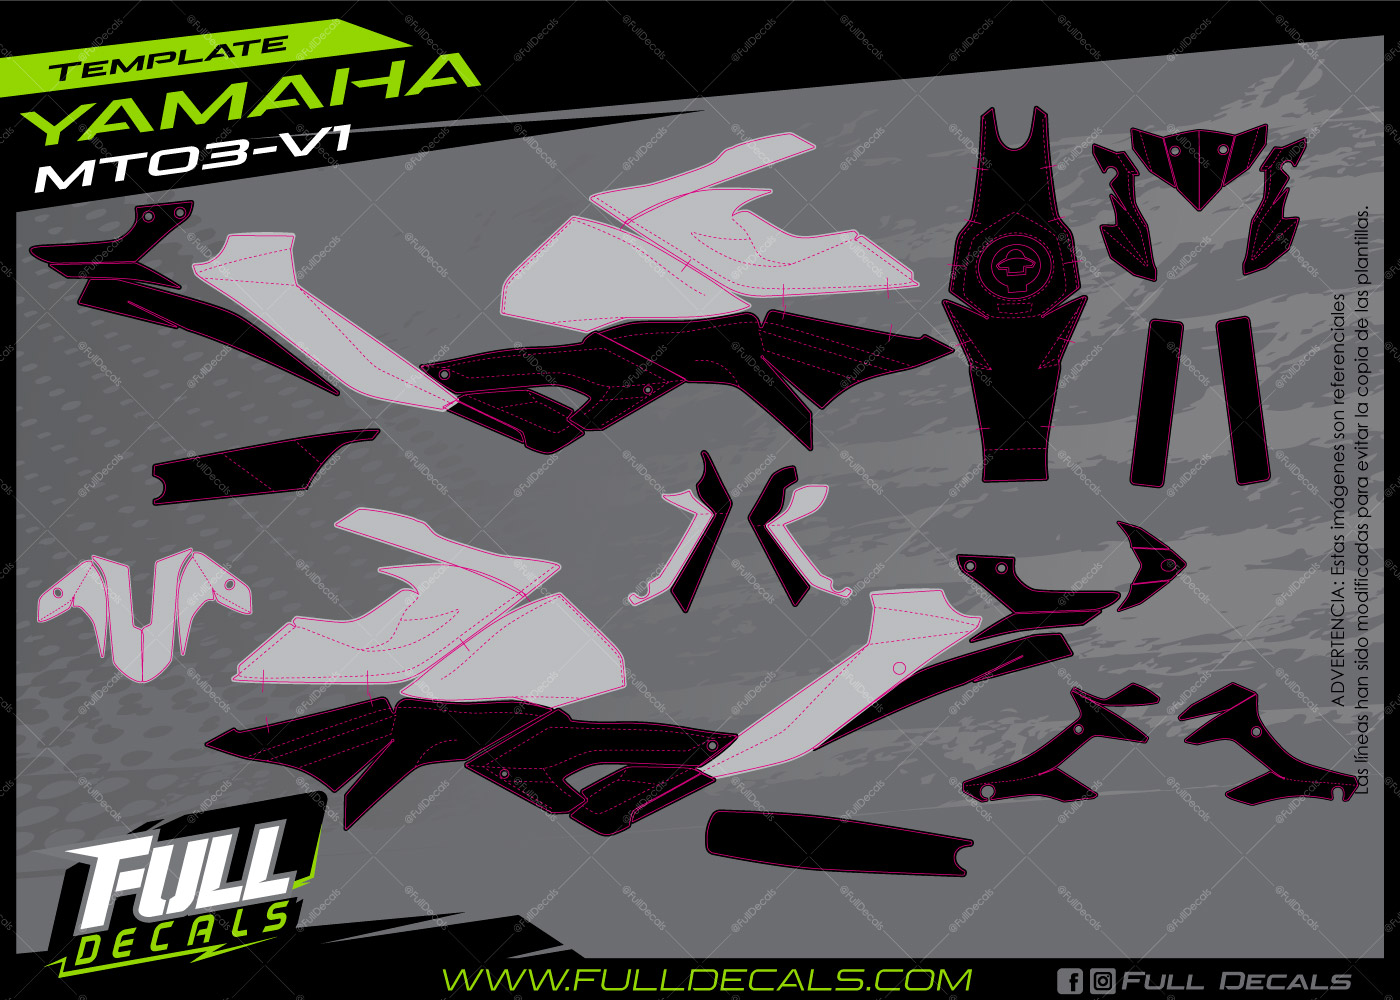 Plantilla Yamaha MT03 V1